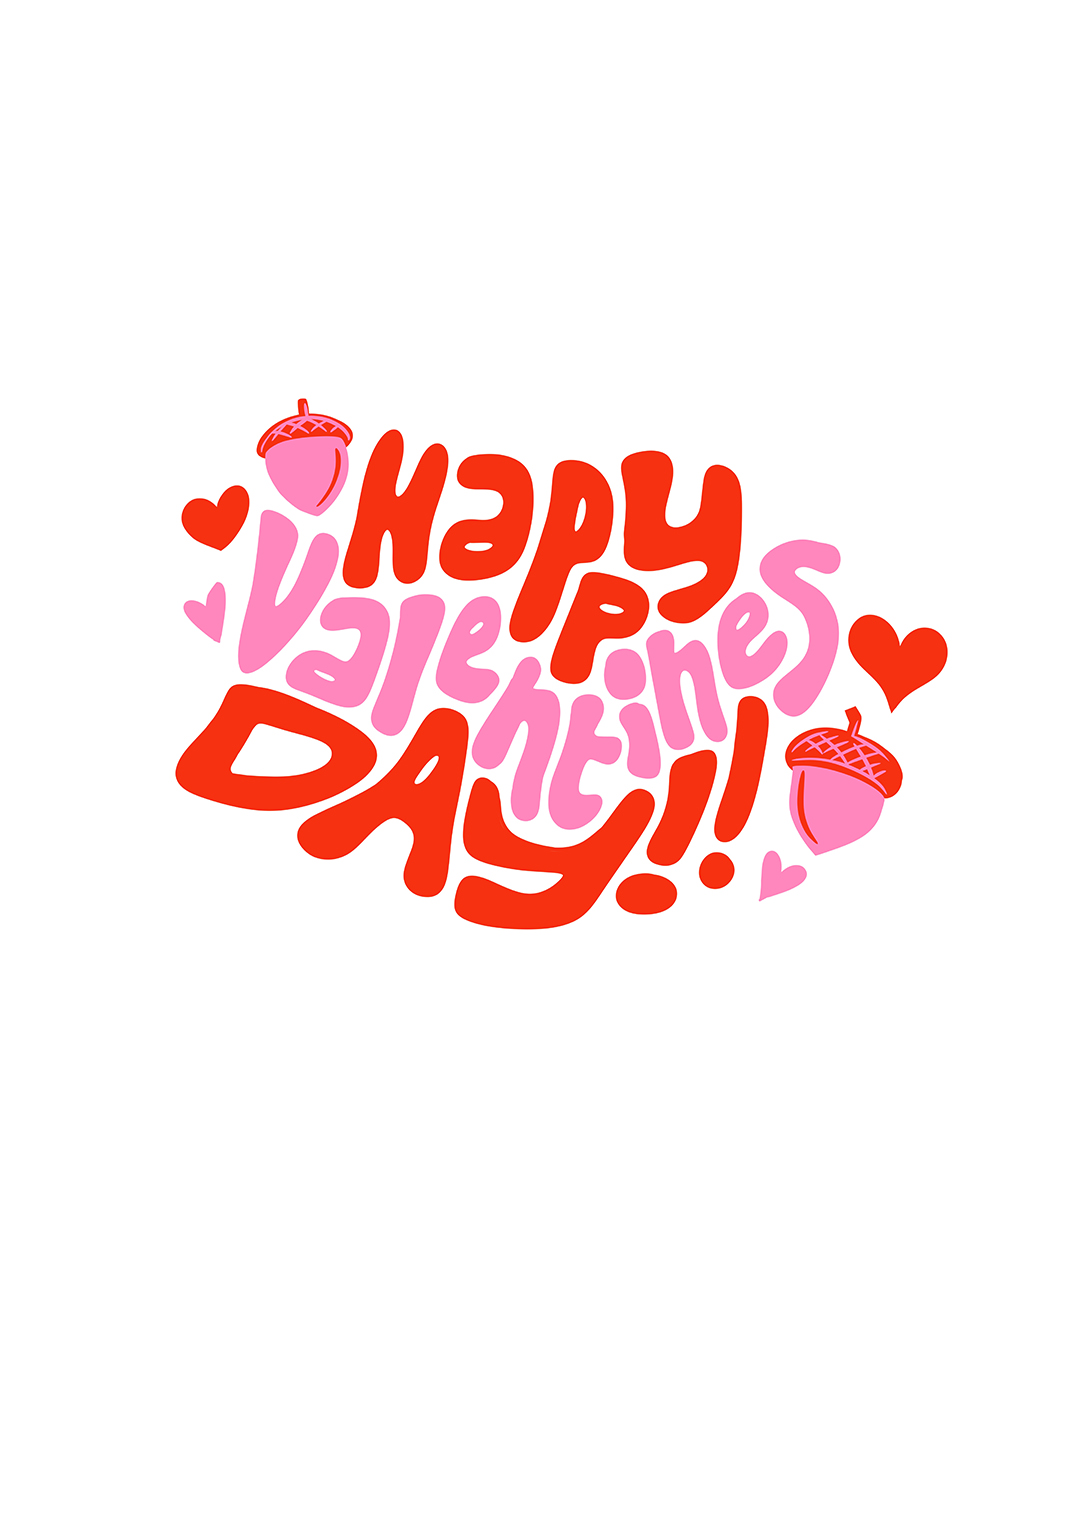 Happy Valentine's Day - Cute Acorn Card